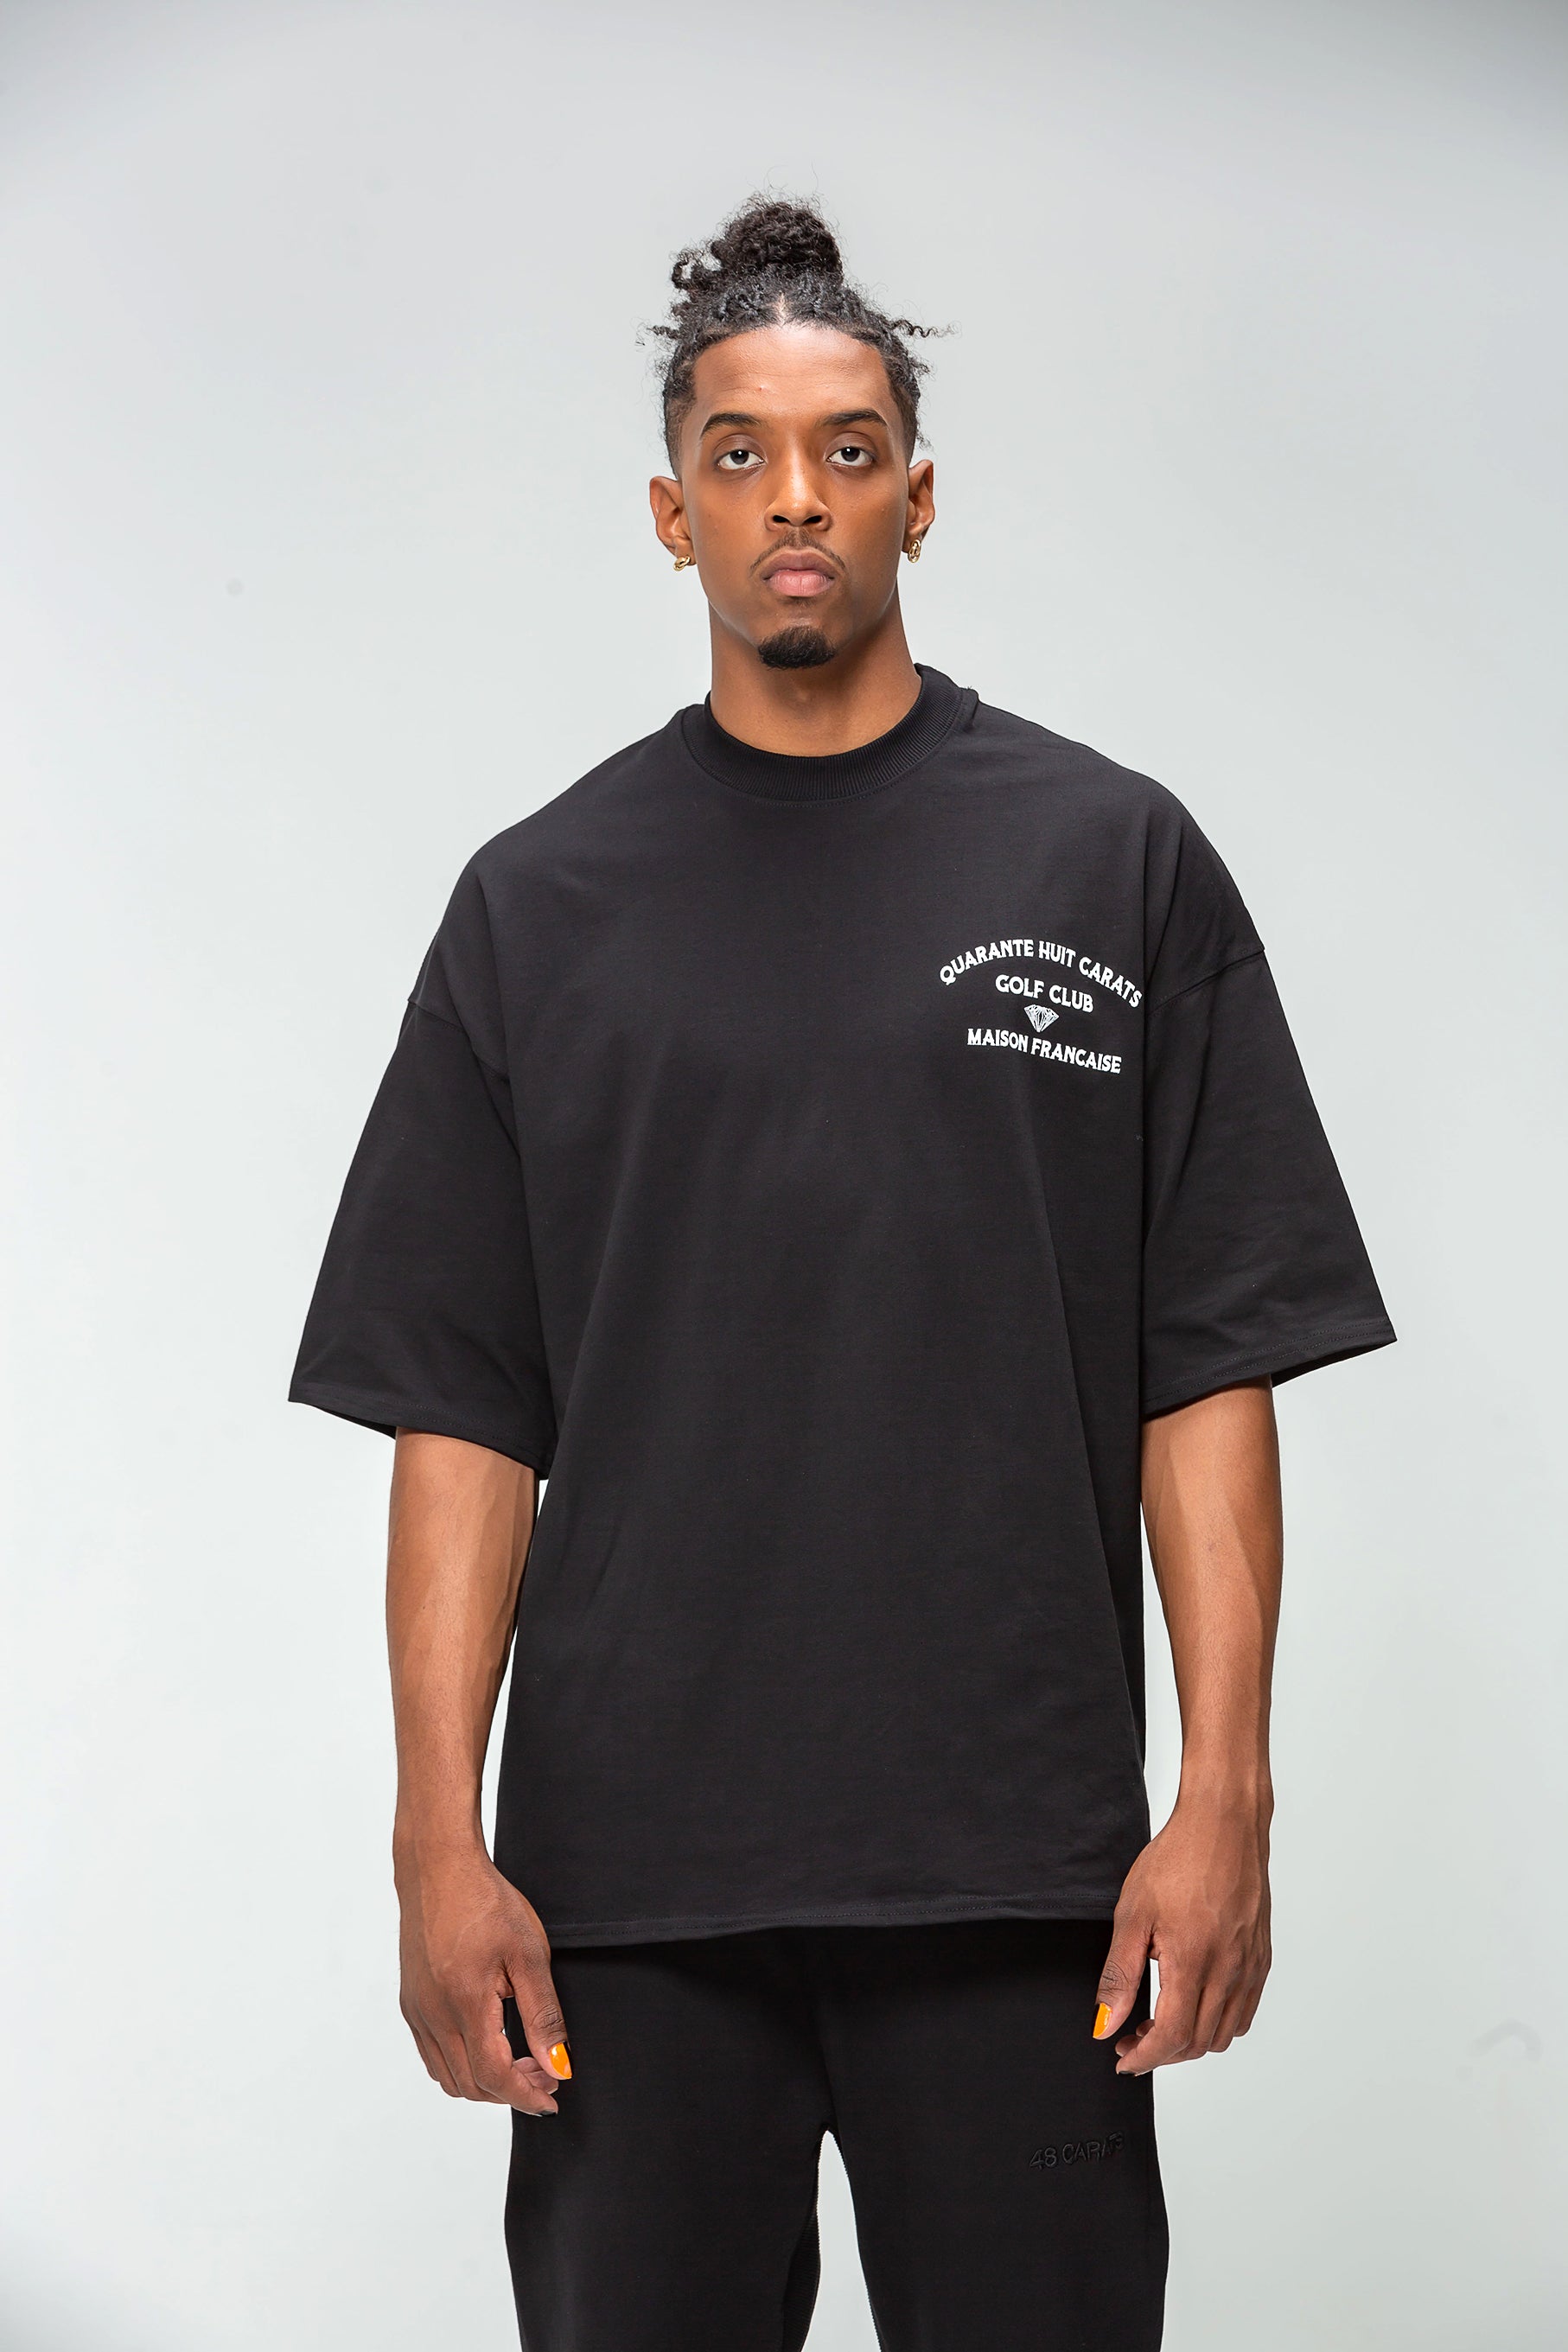 T-shirt Oversize Noir 48 Carats - Élégance Golf Club